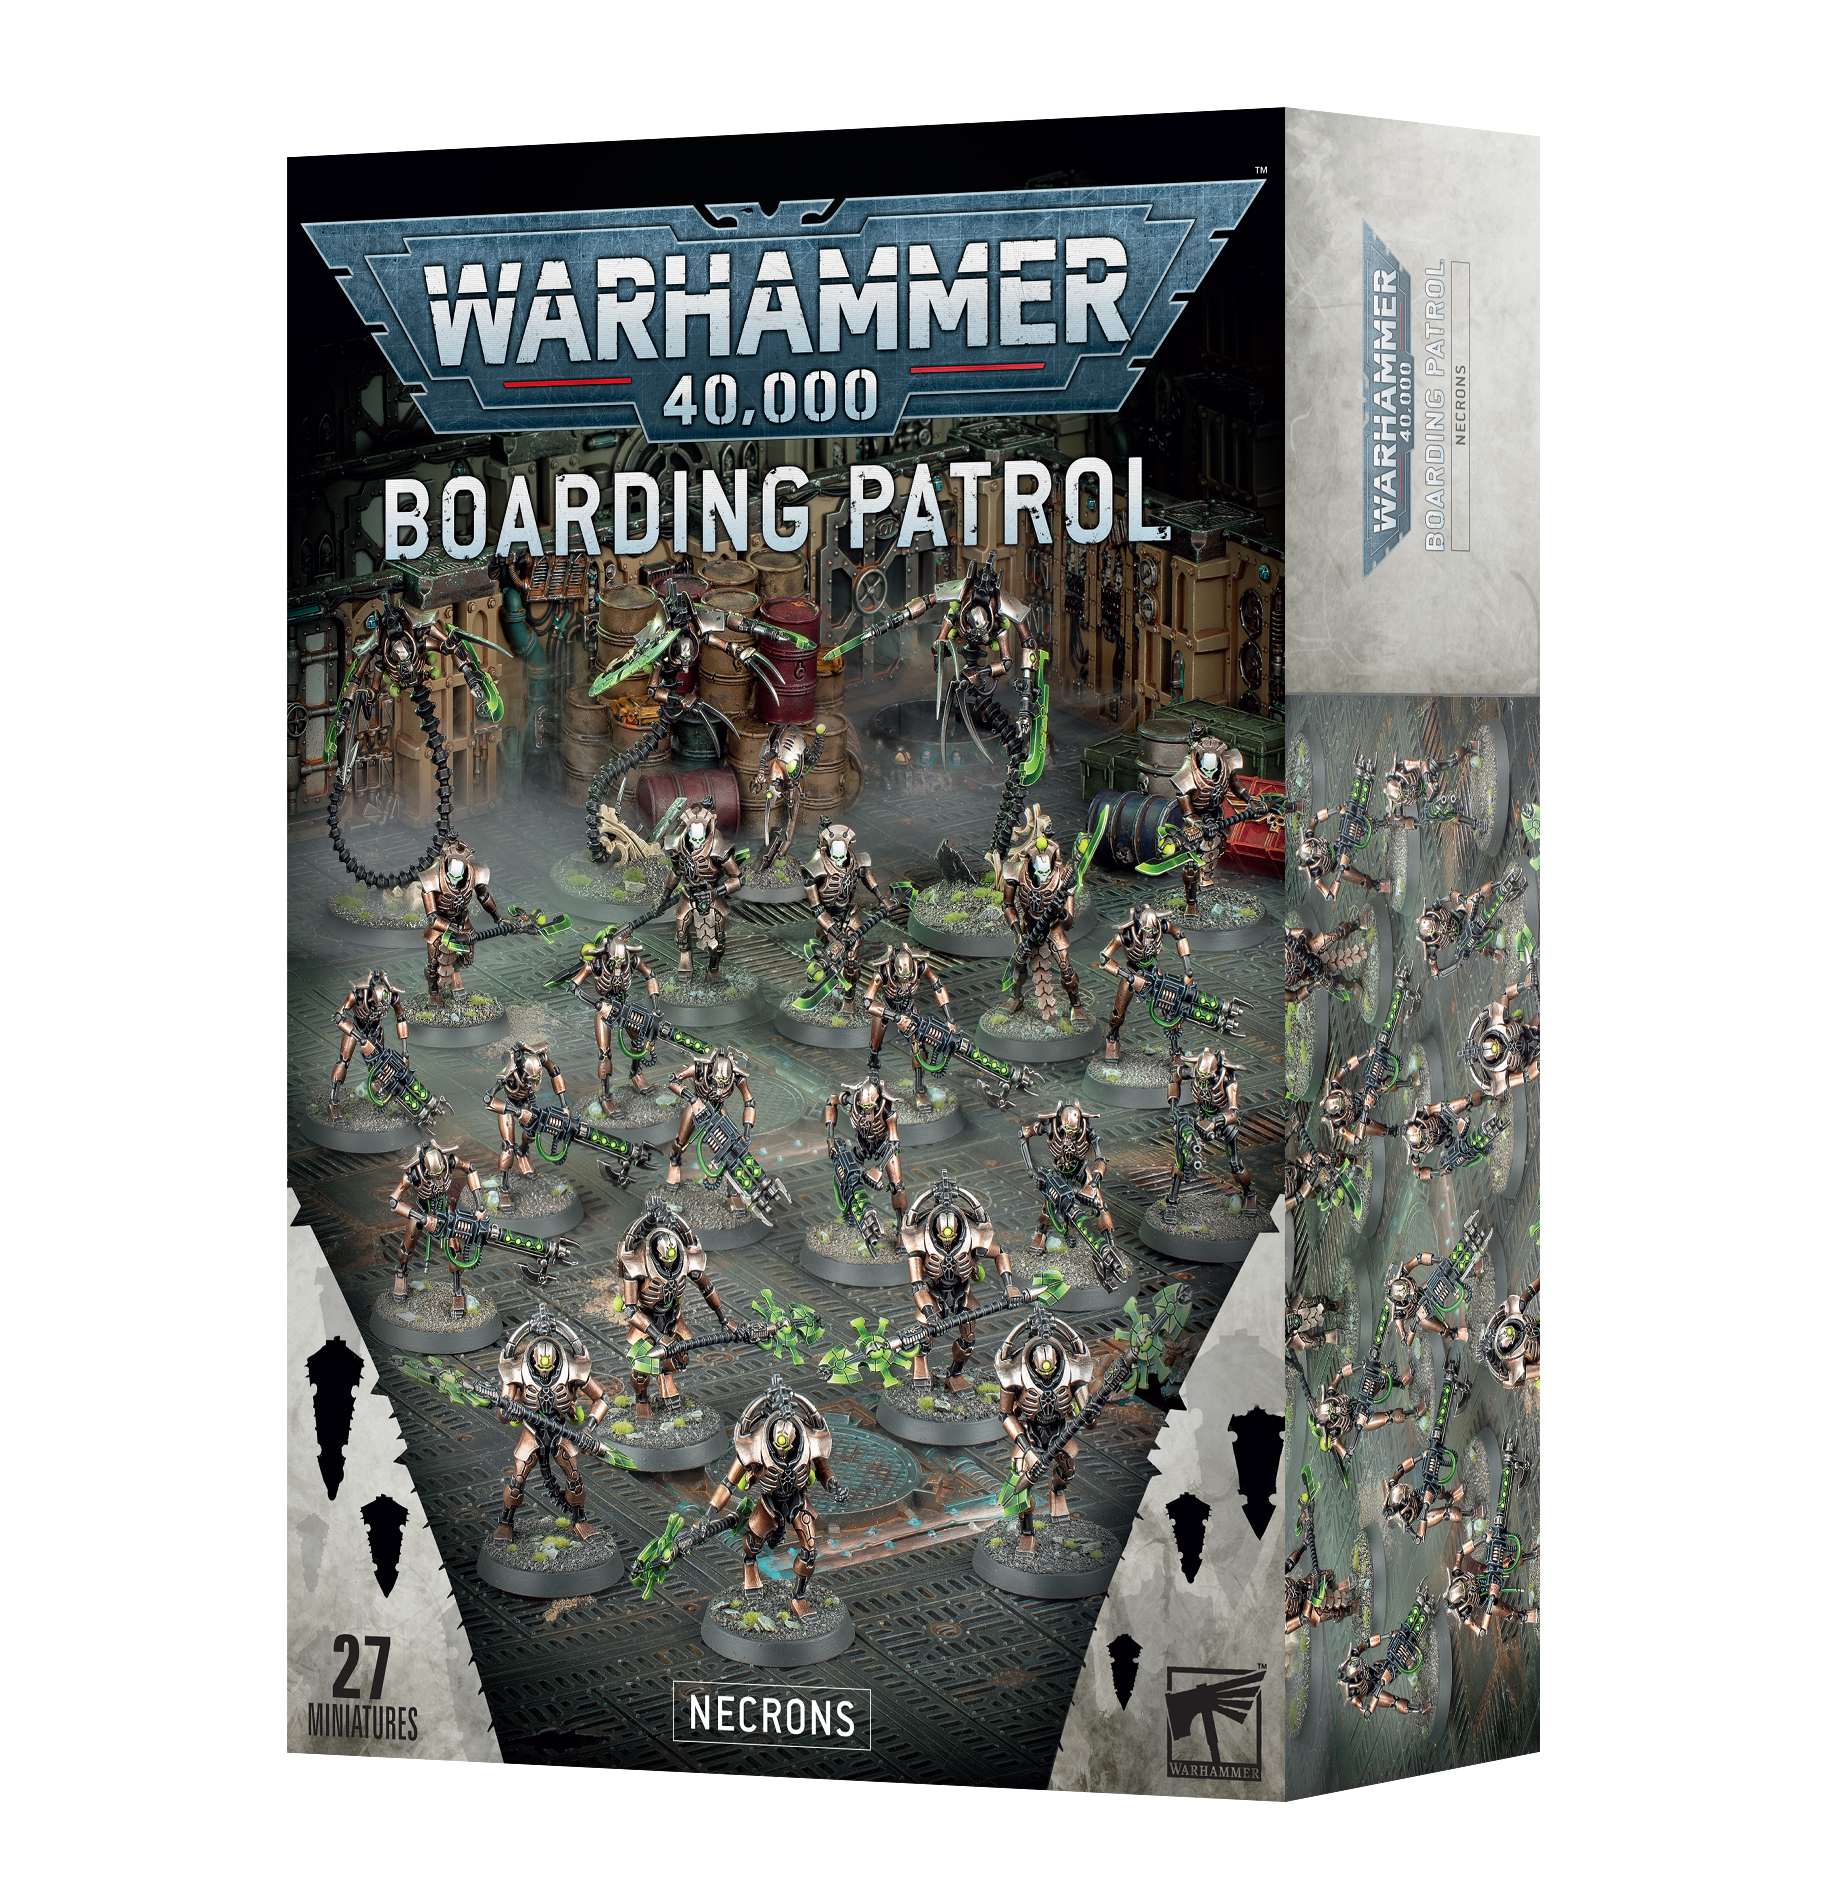 Warhammer 40,000: Boarding Patrol: Necrons (Apr 1st) 